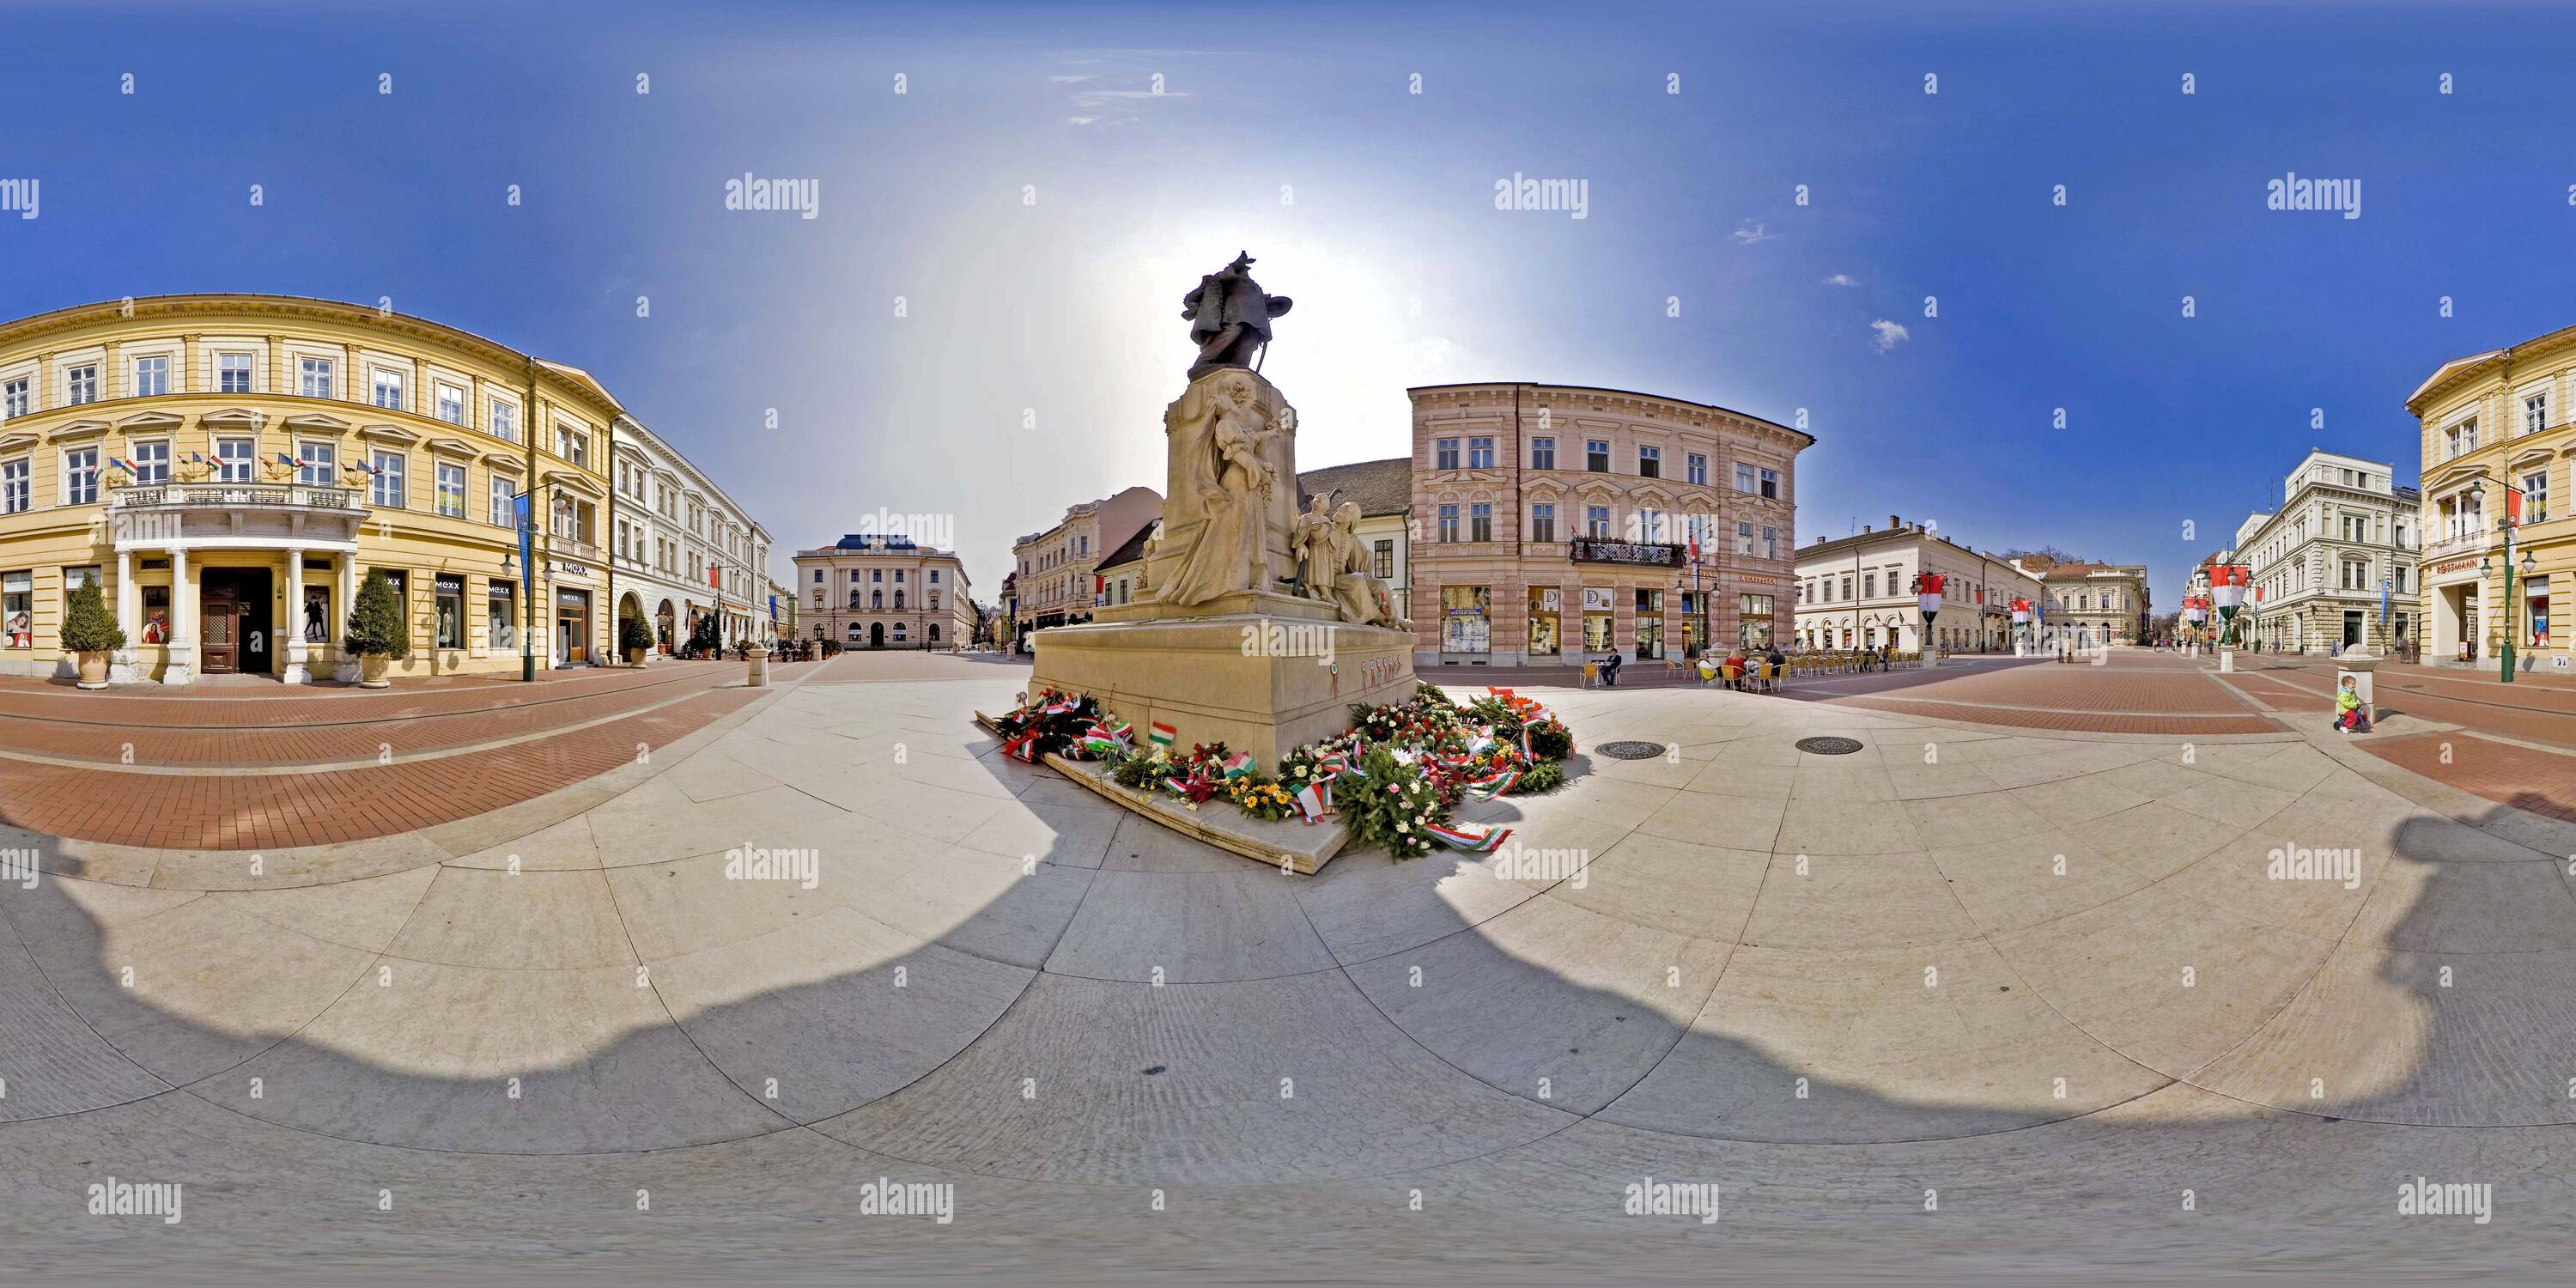 360 degree panoramic view of Klauzal Square Kossuth sculpture